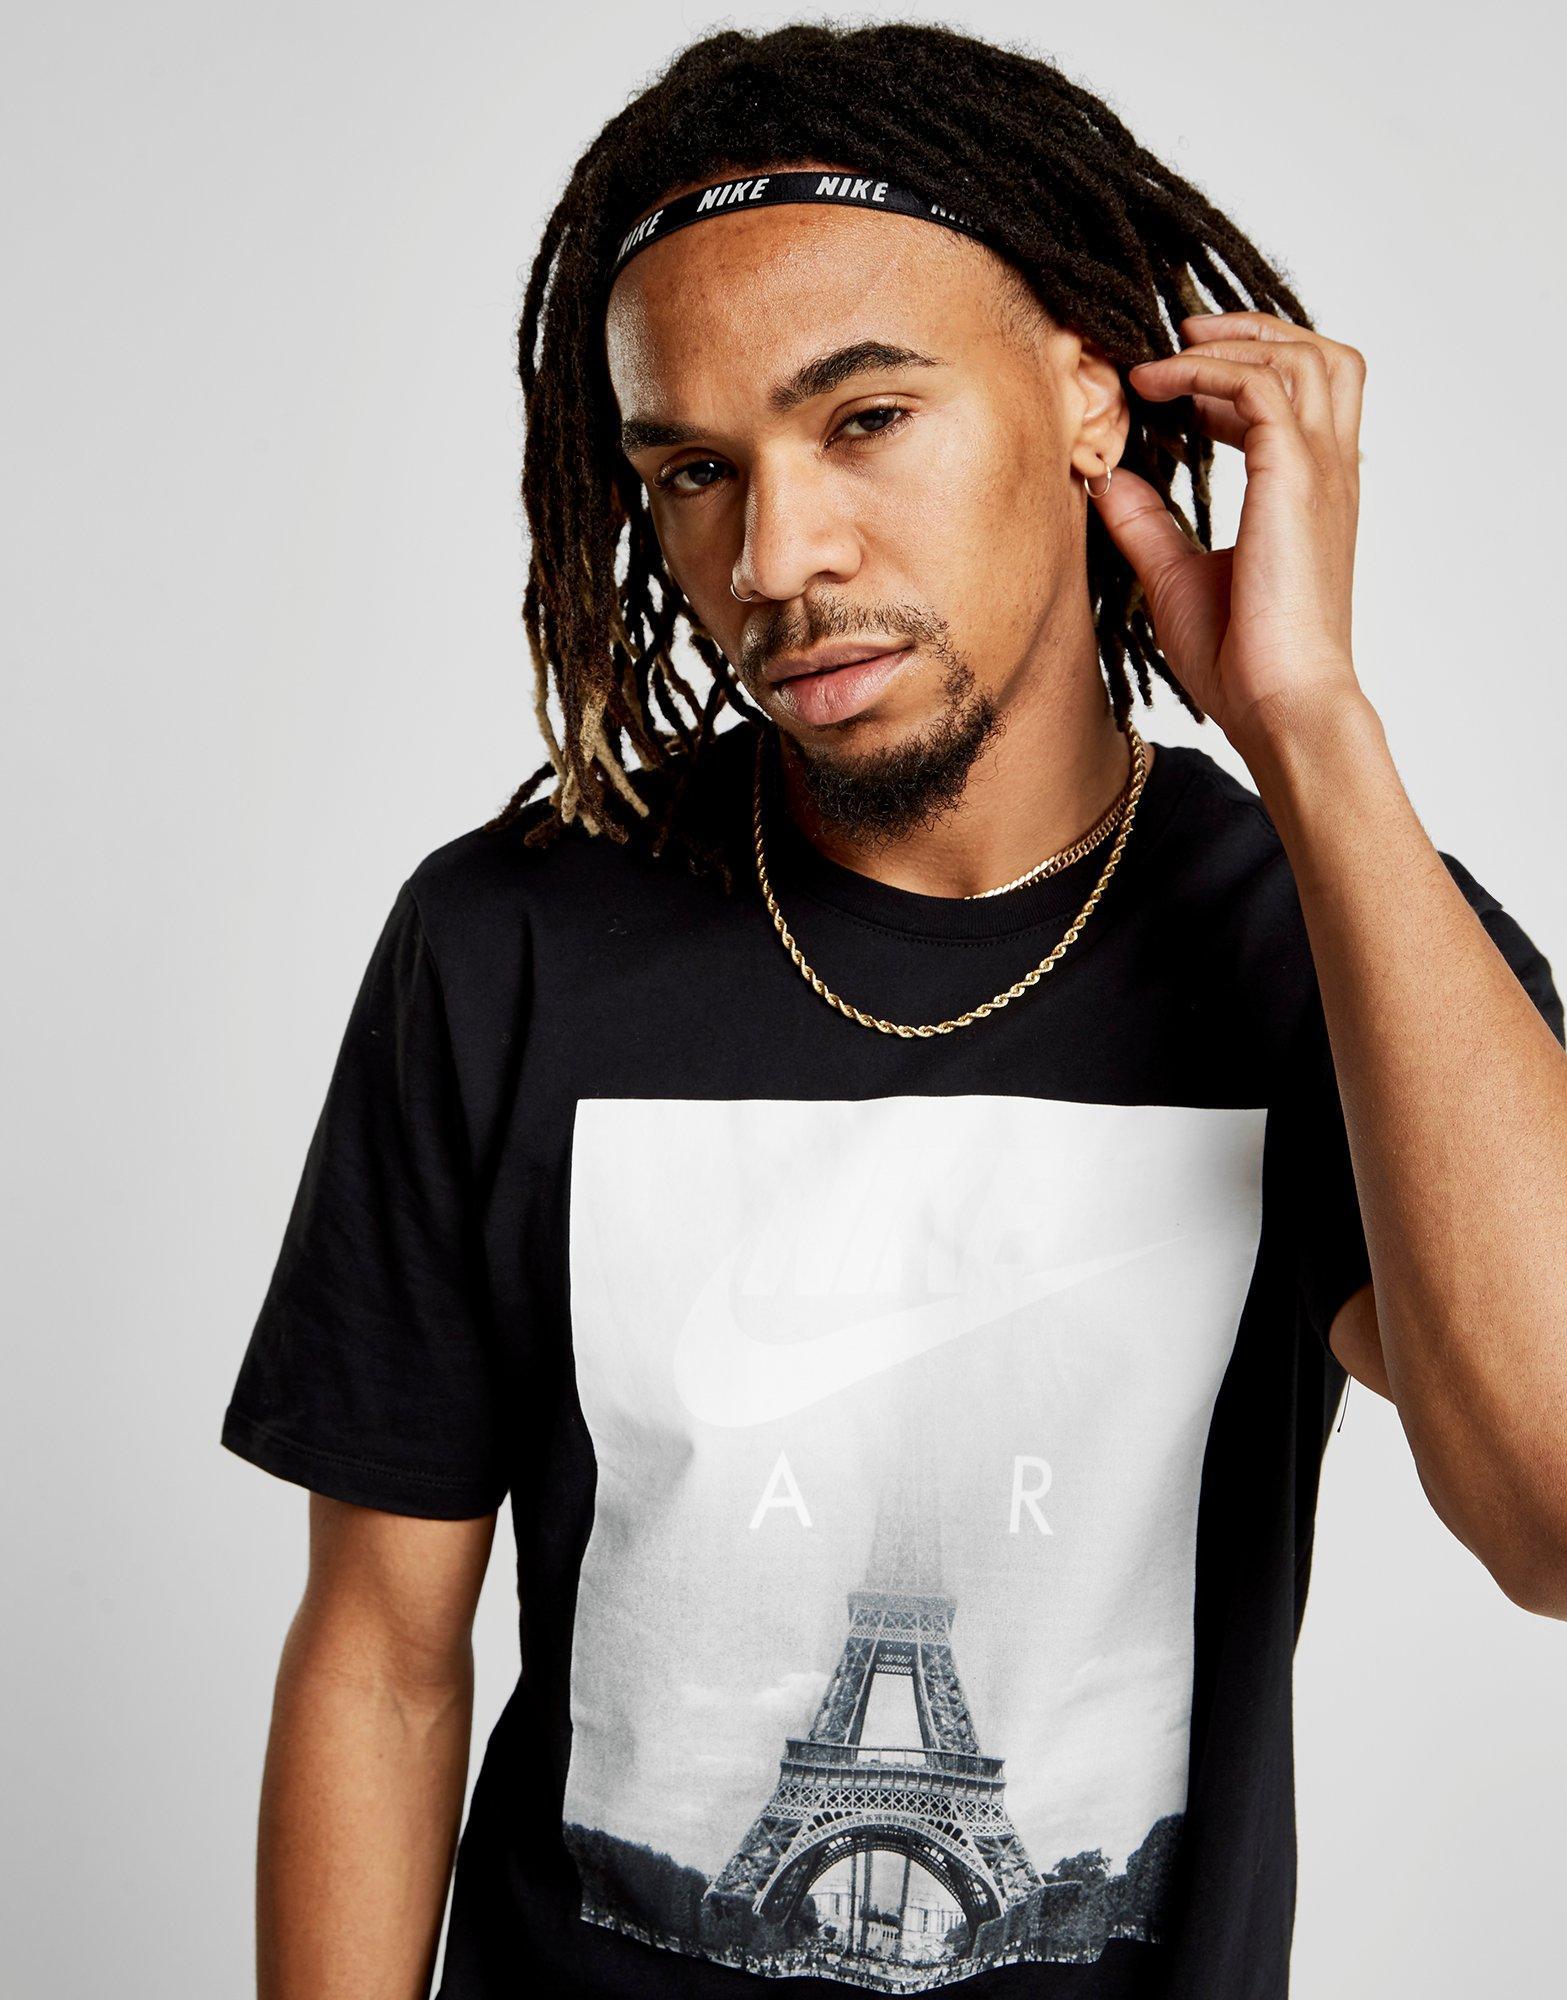 Nike Cotton Air Paris T-shirt in Black/White (Black) for Men - Lyst